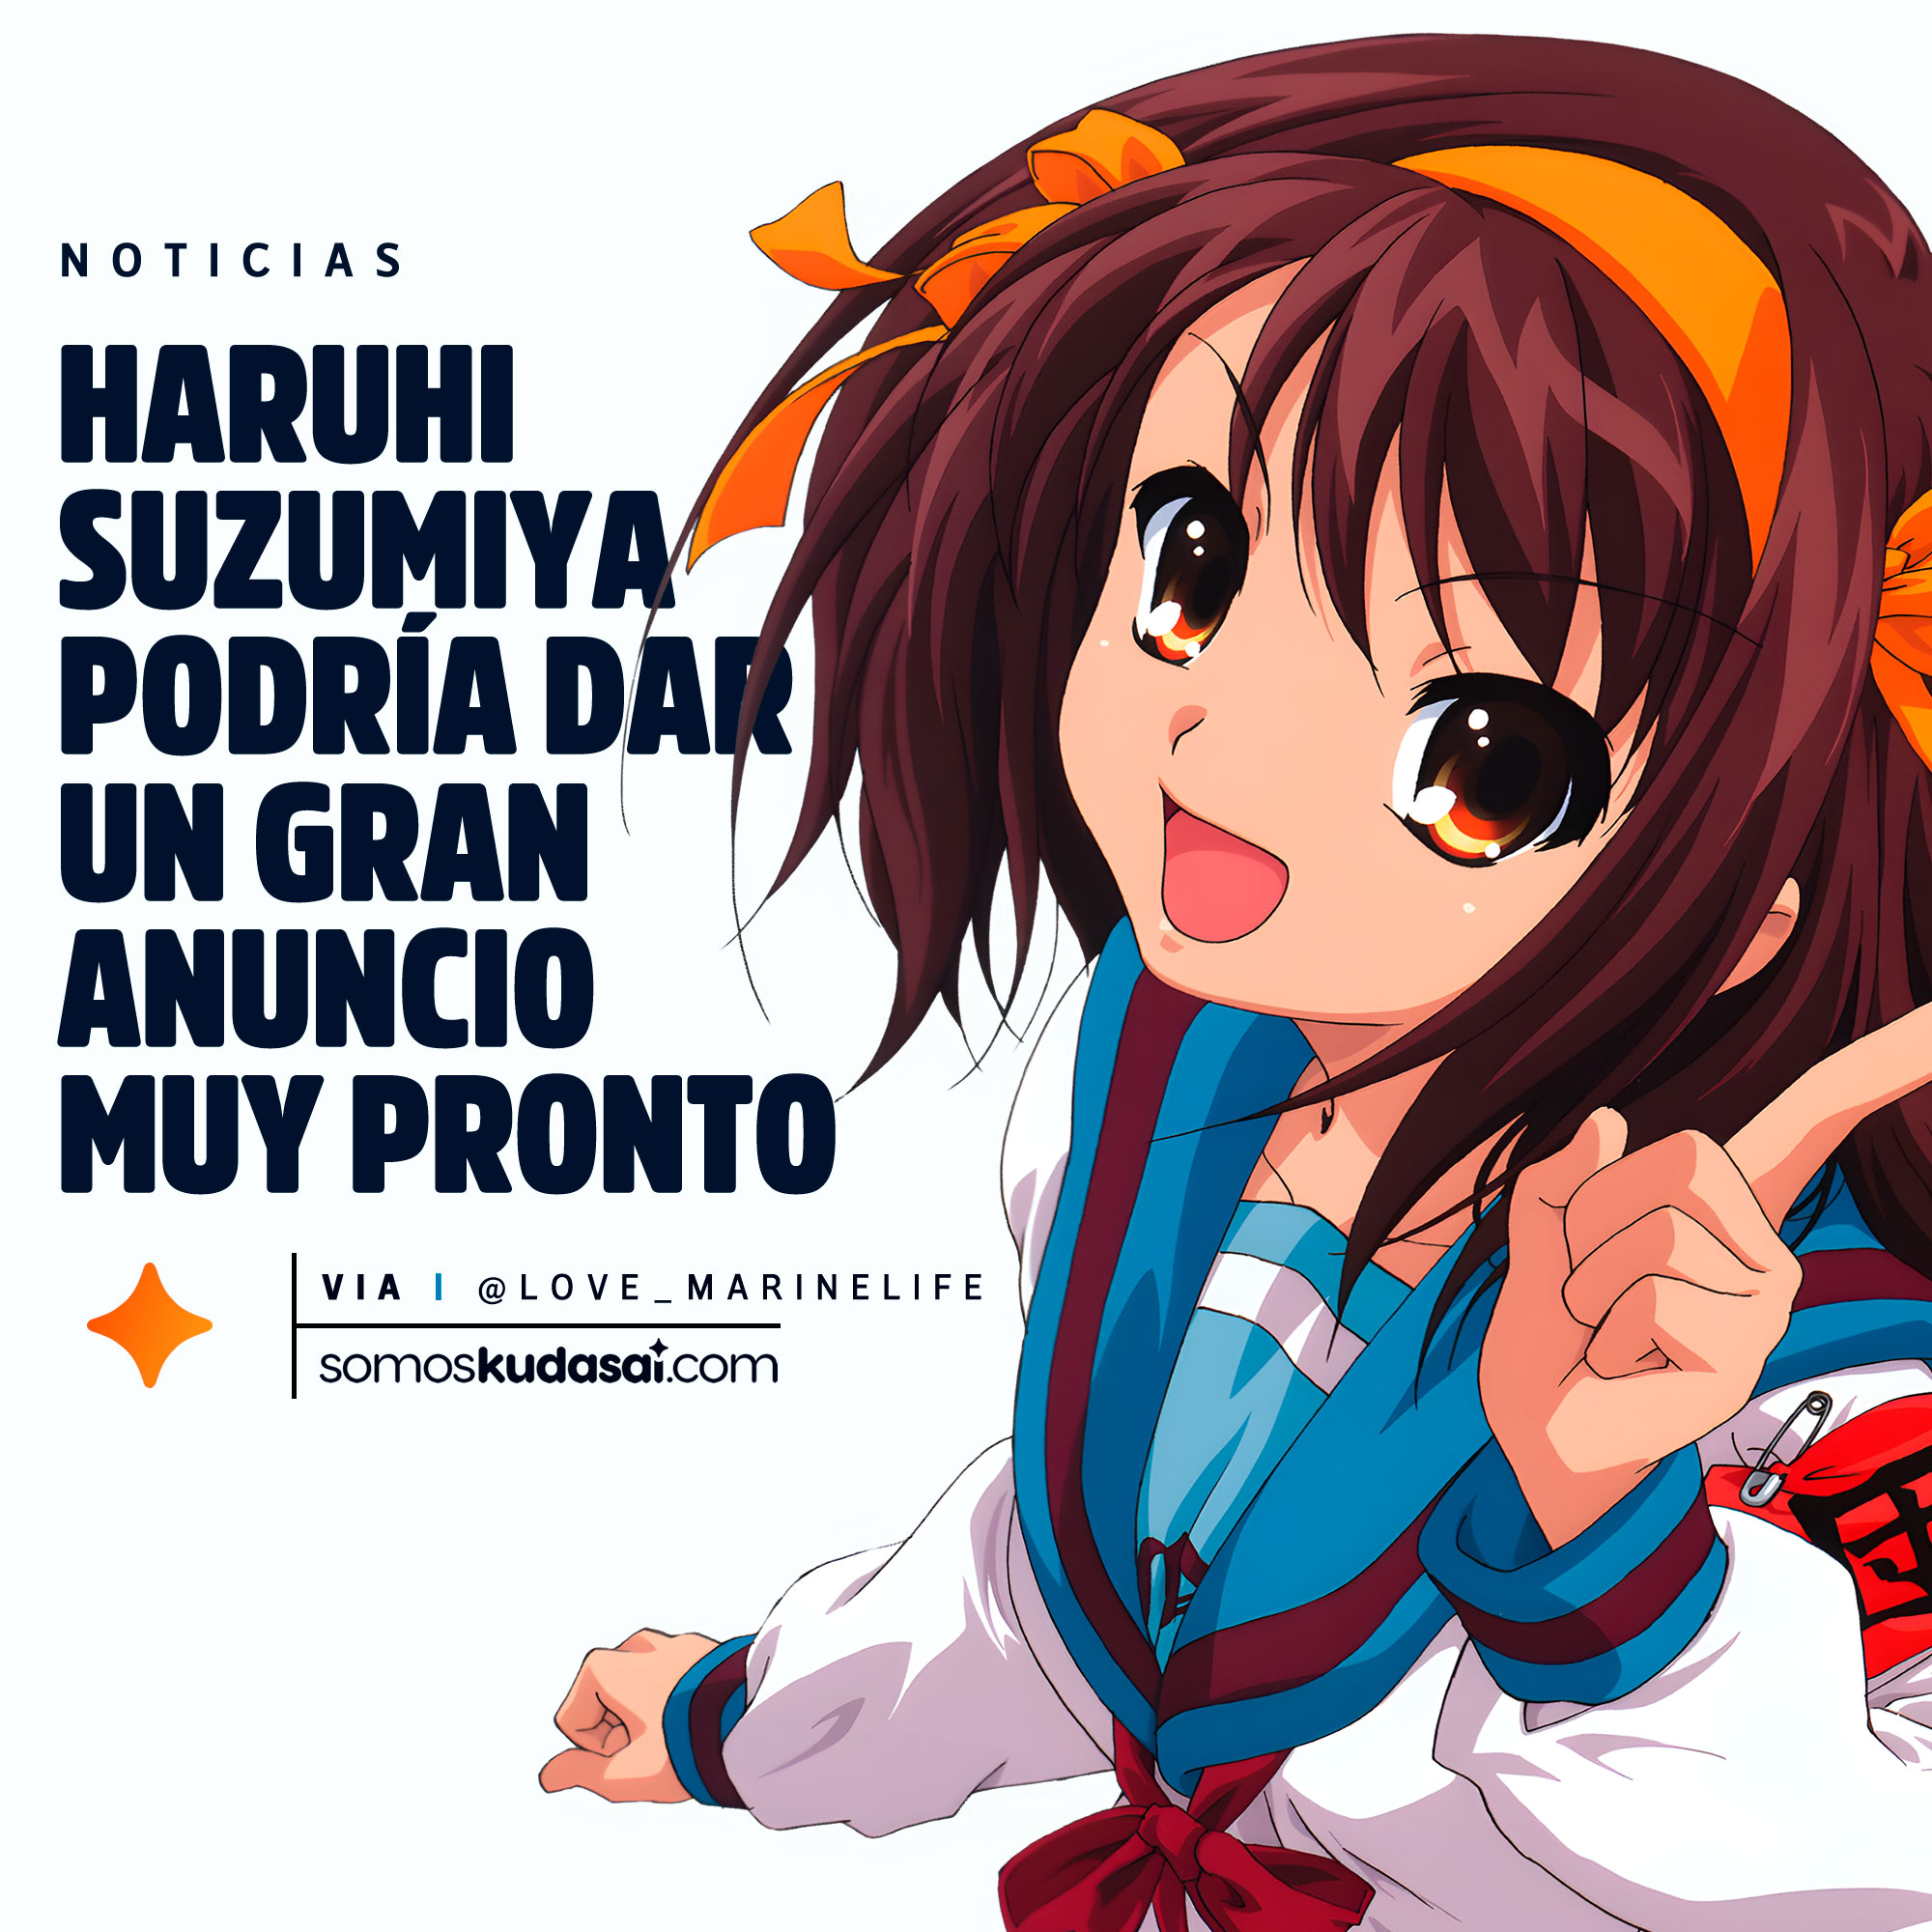 Shuumatsu no harem, capítulo 3 online sub español: fecha y hora de estreno  del anime, Crunchyroll, Manga, México, Japón, Animes